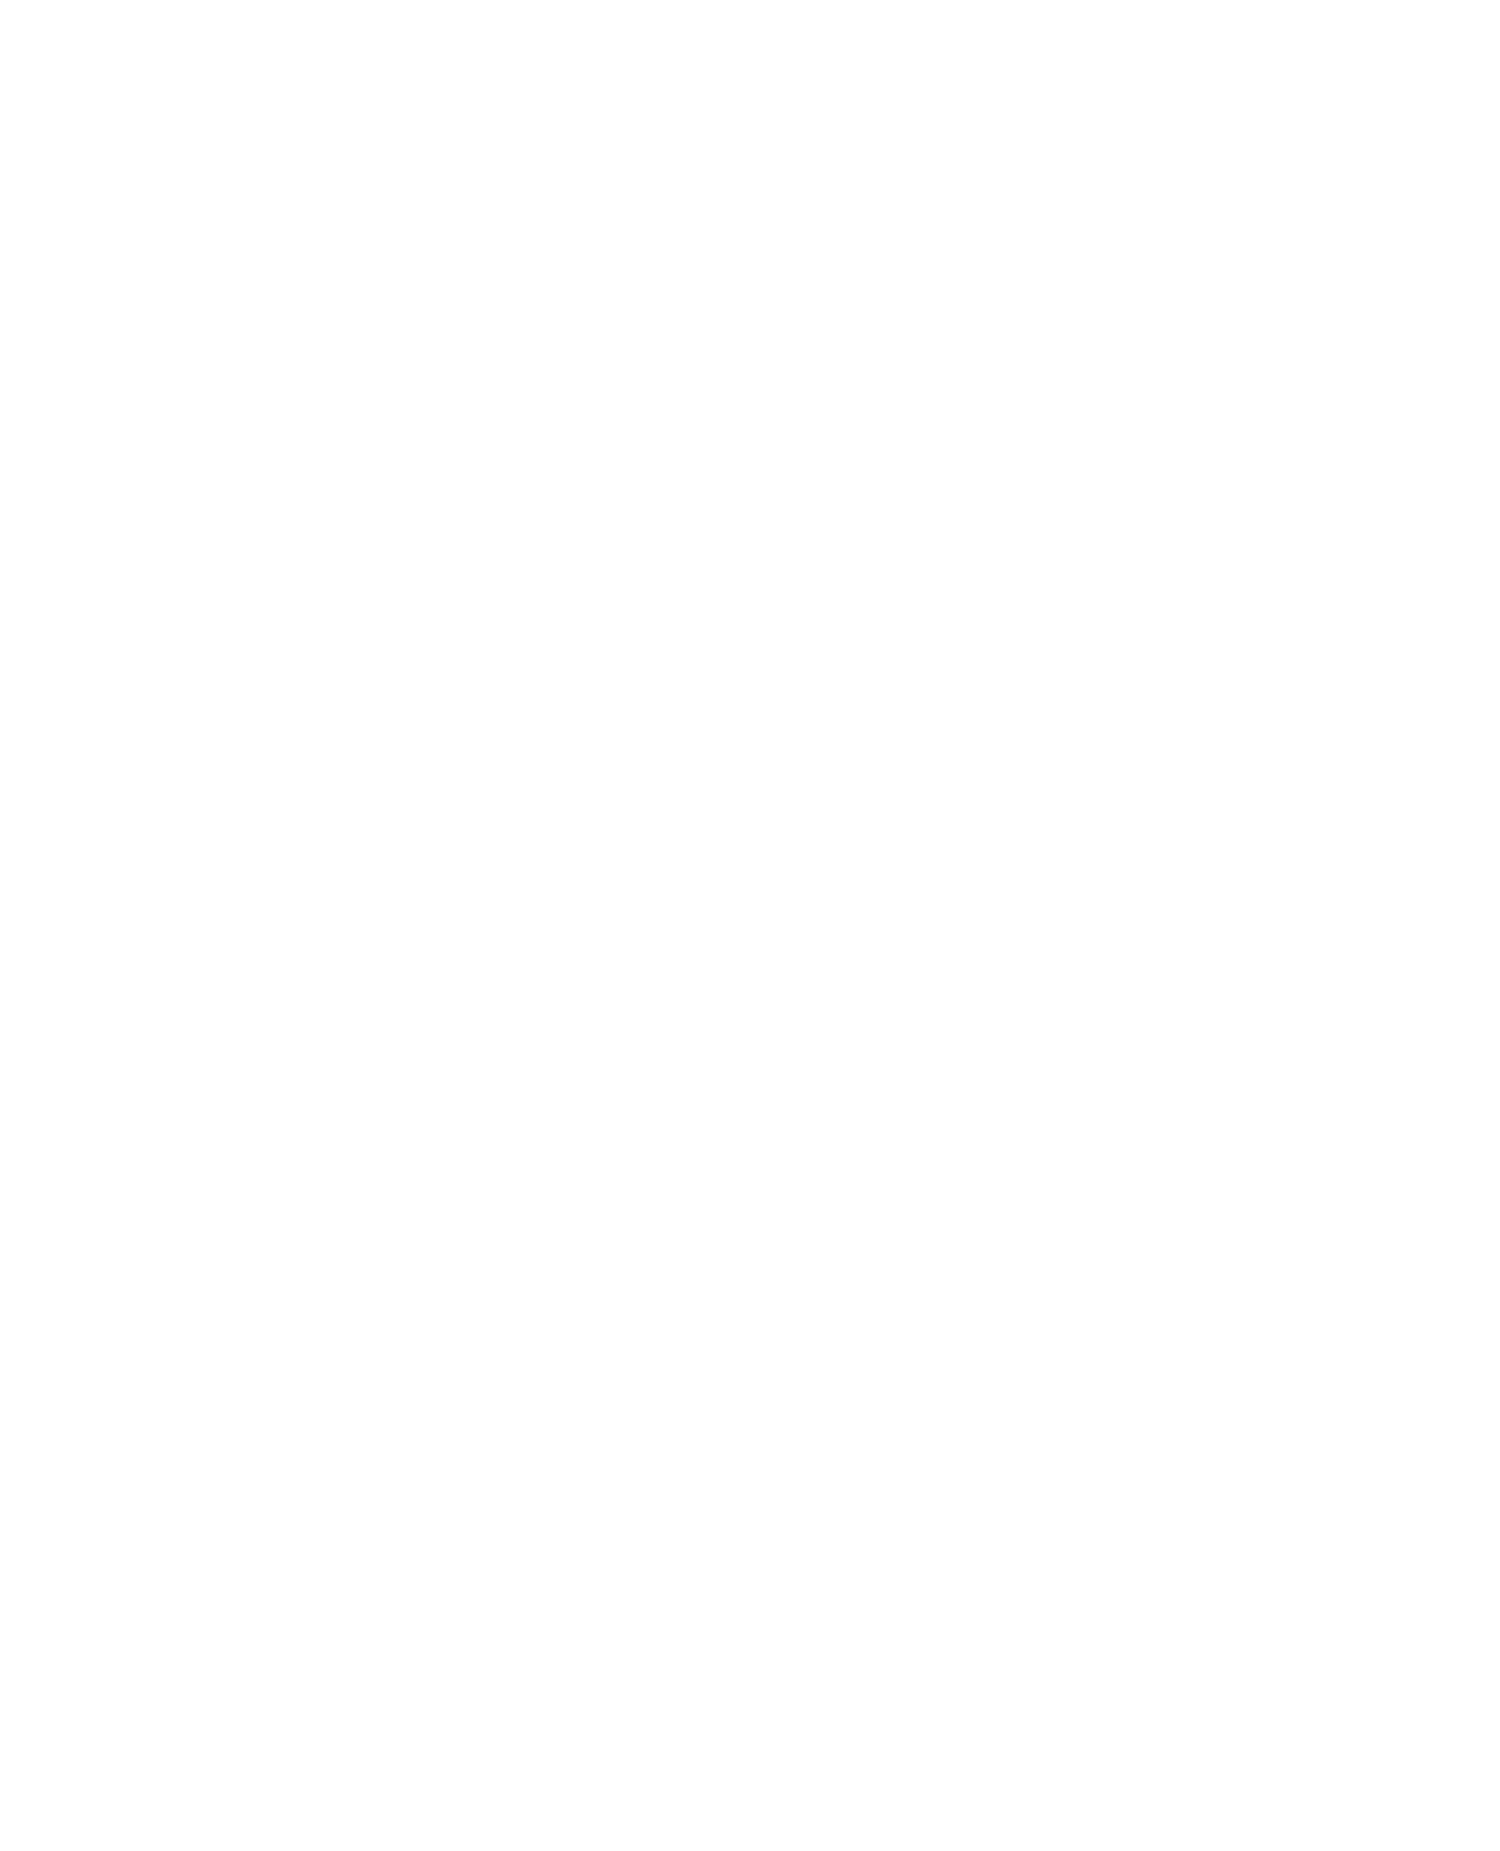 Ridgebacks in Need, California